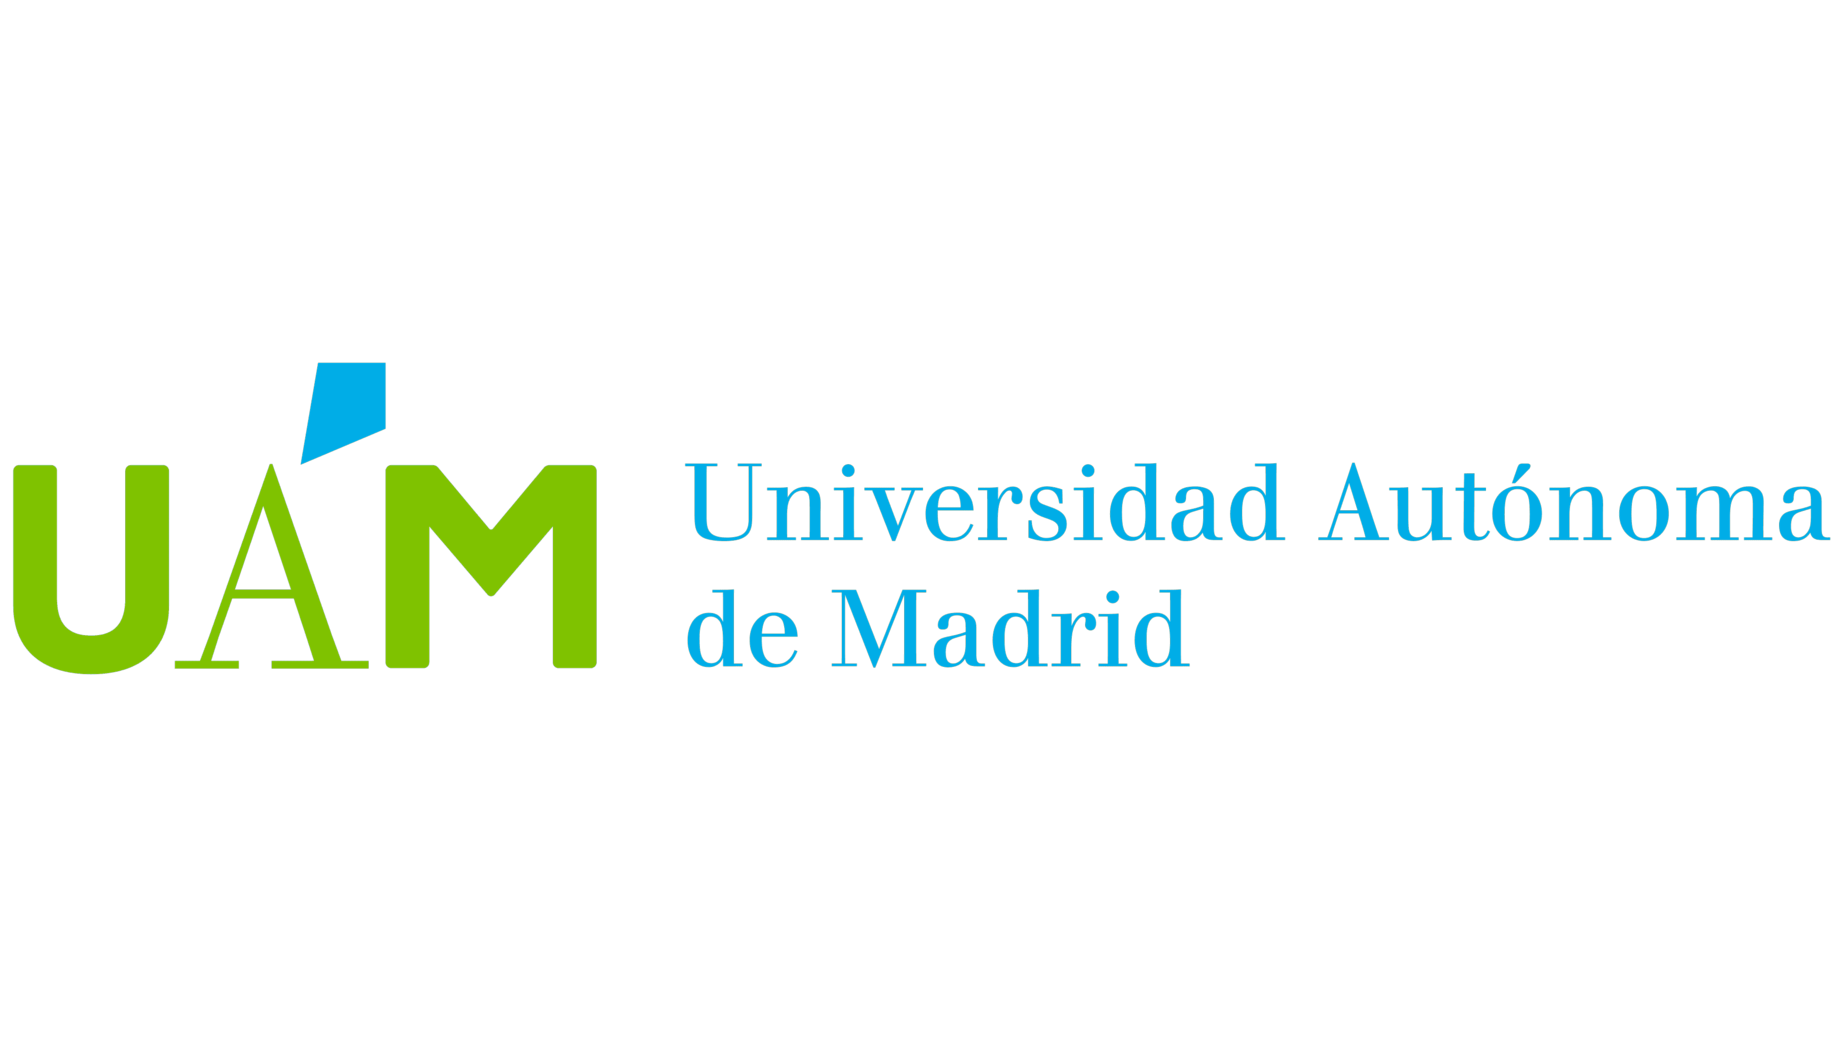 Universidad autonoma de madrid sign 2019